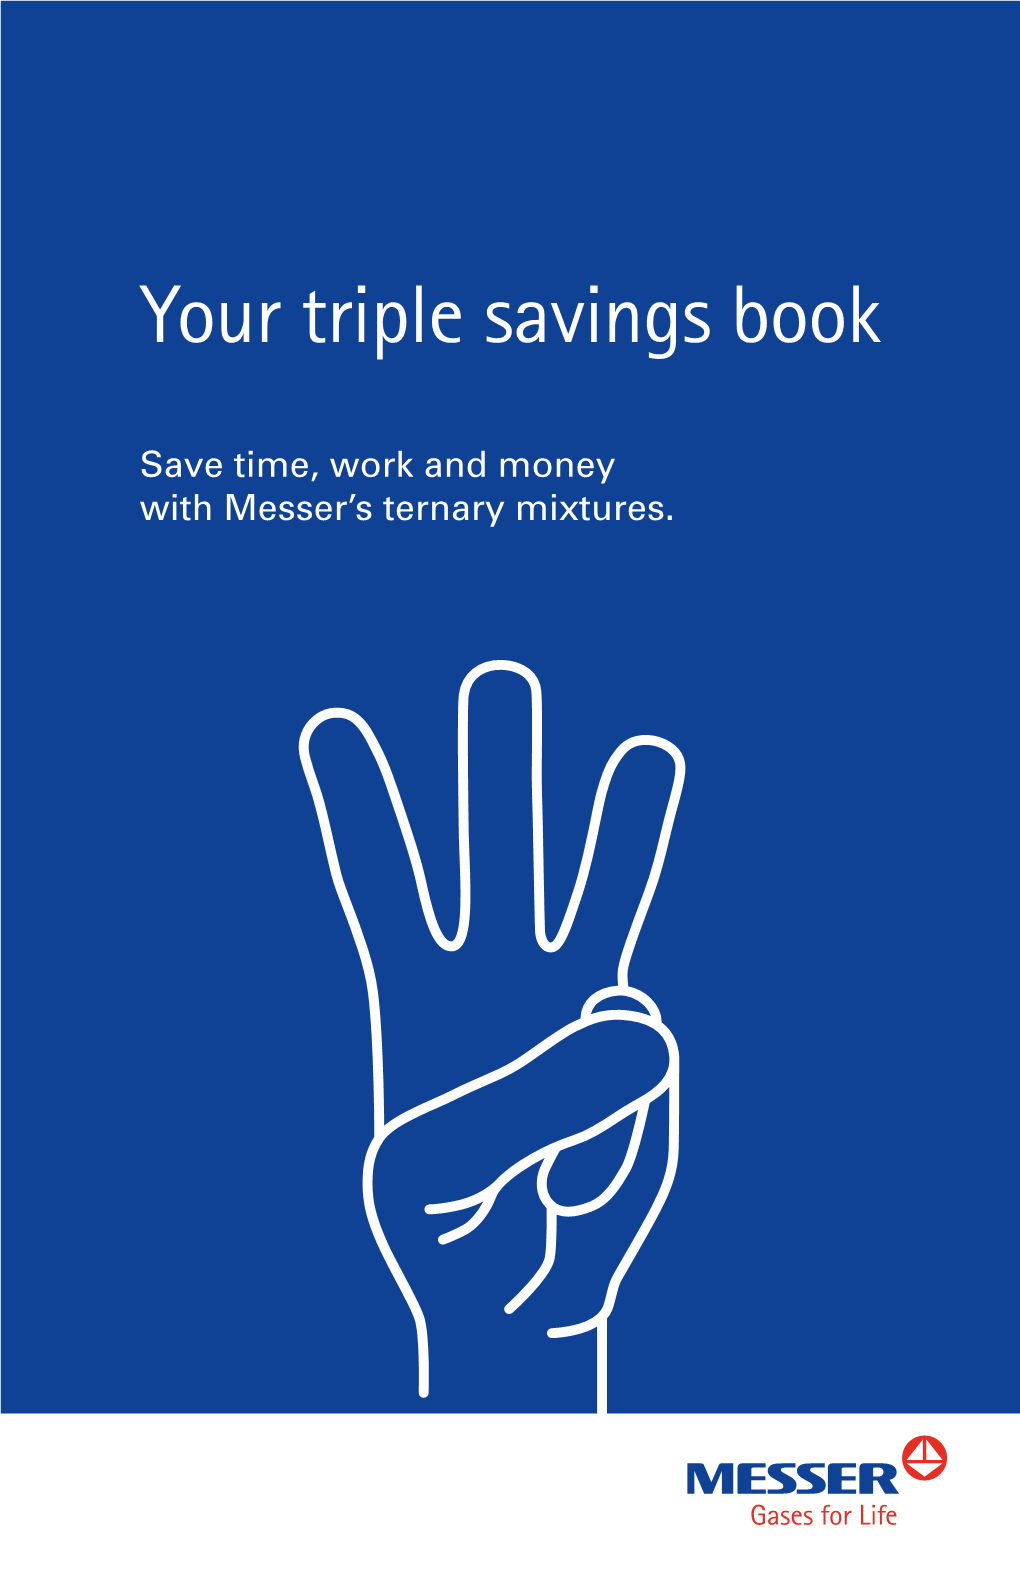 Your Triple Savings Book